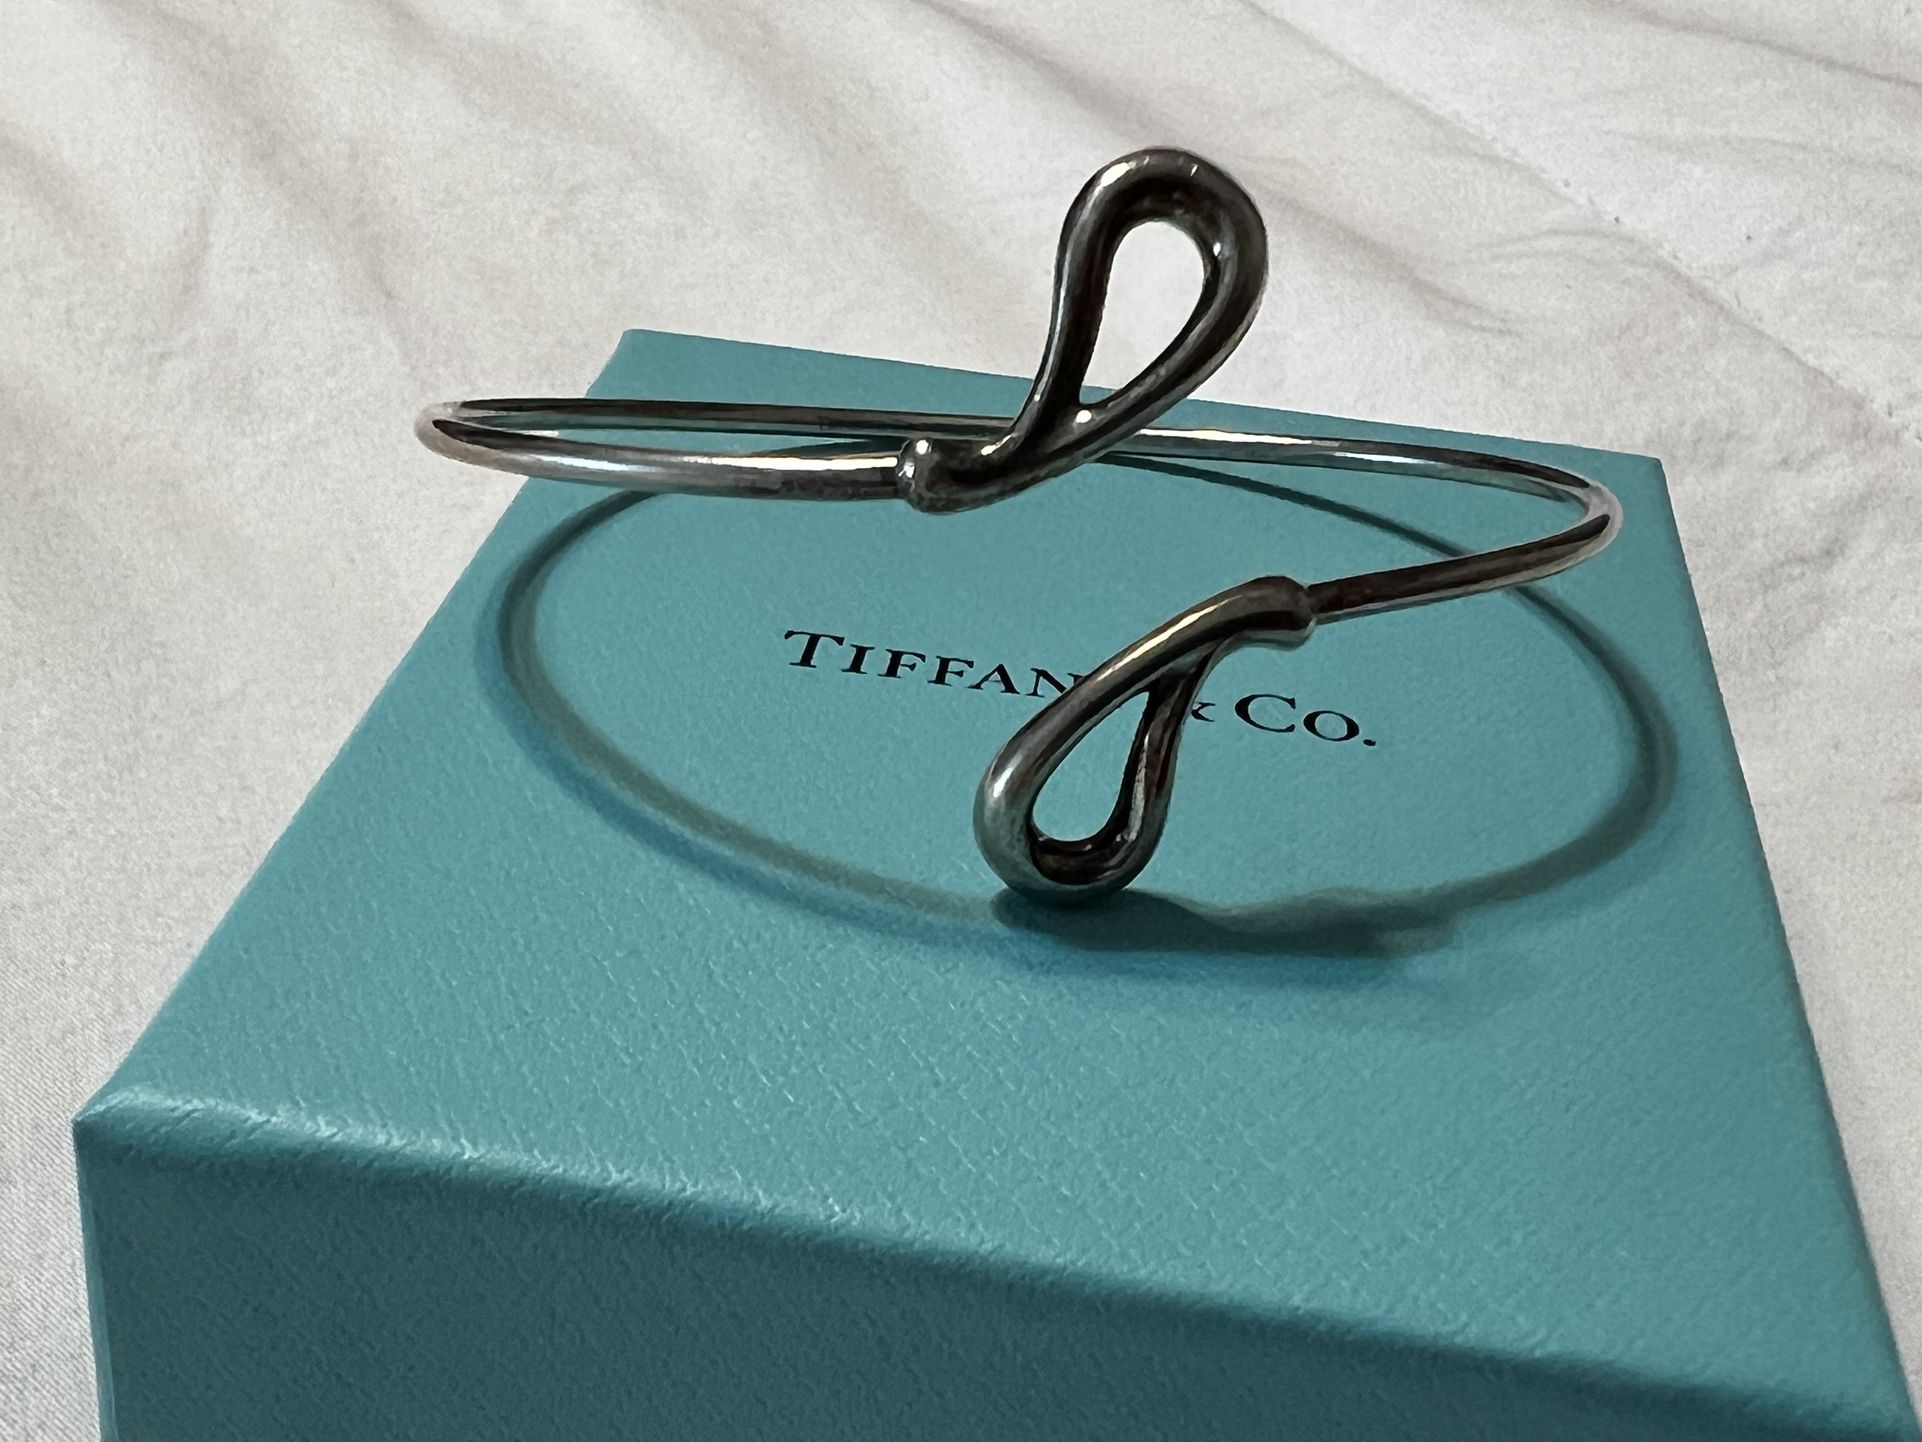 Tiffany & Co. Adjustable Silver Bracelet.